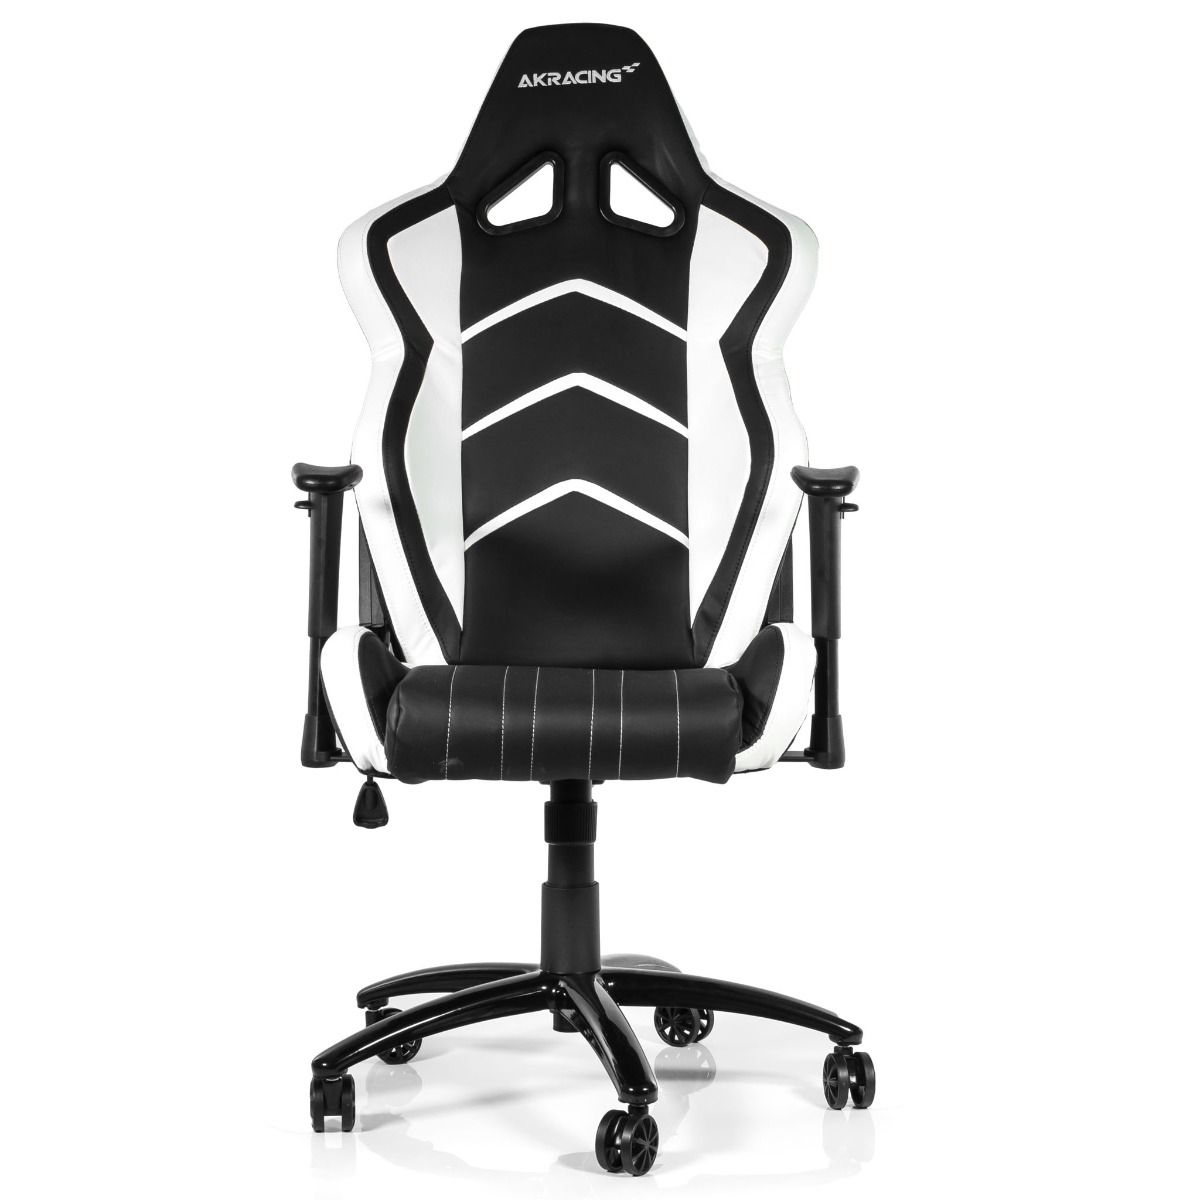 AKRACING PLAYER Gaming Chair Black White